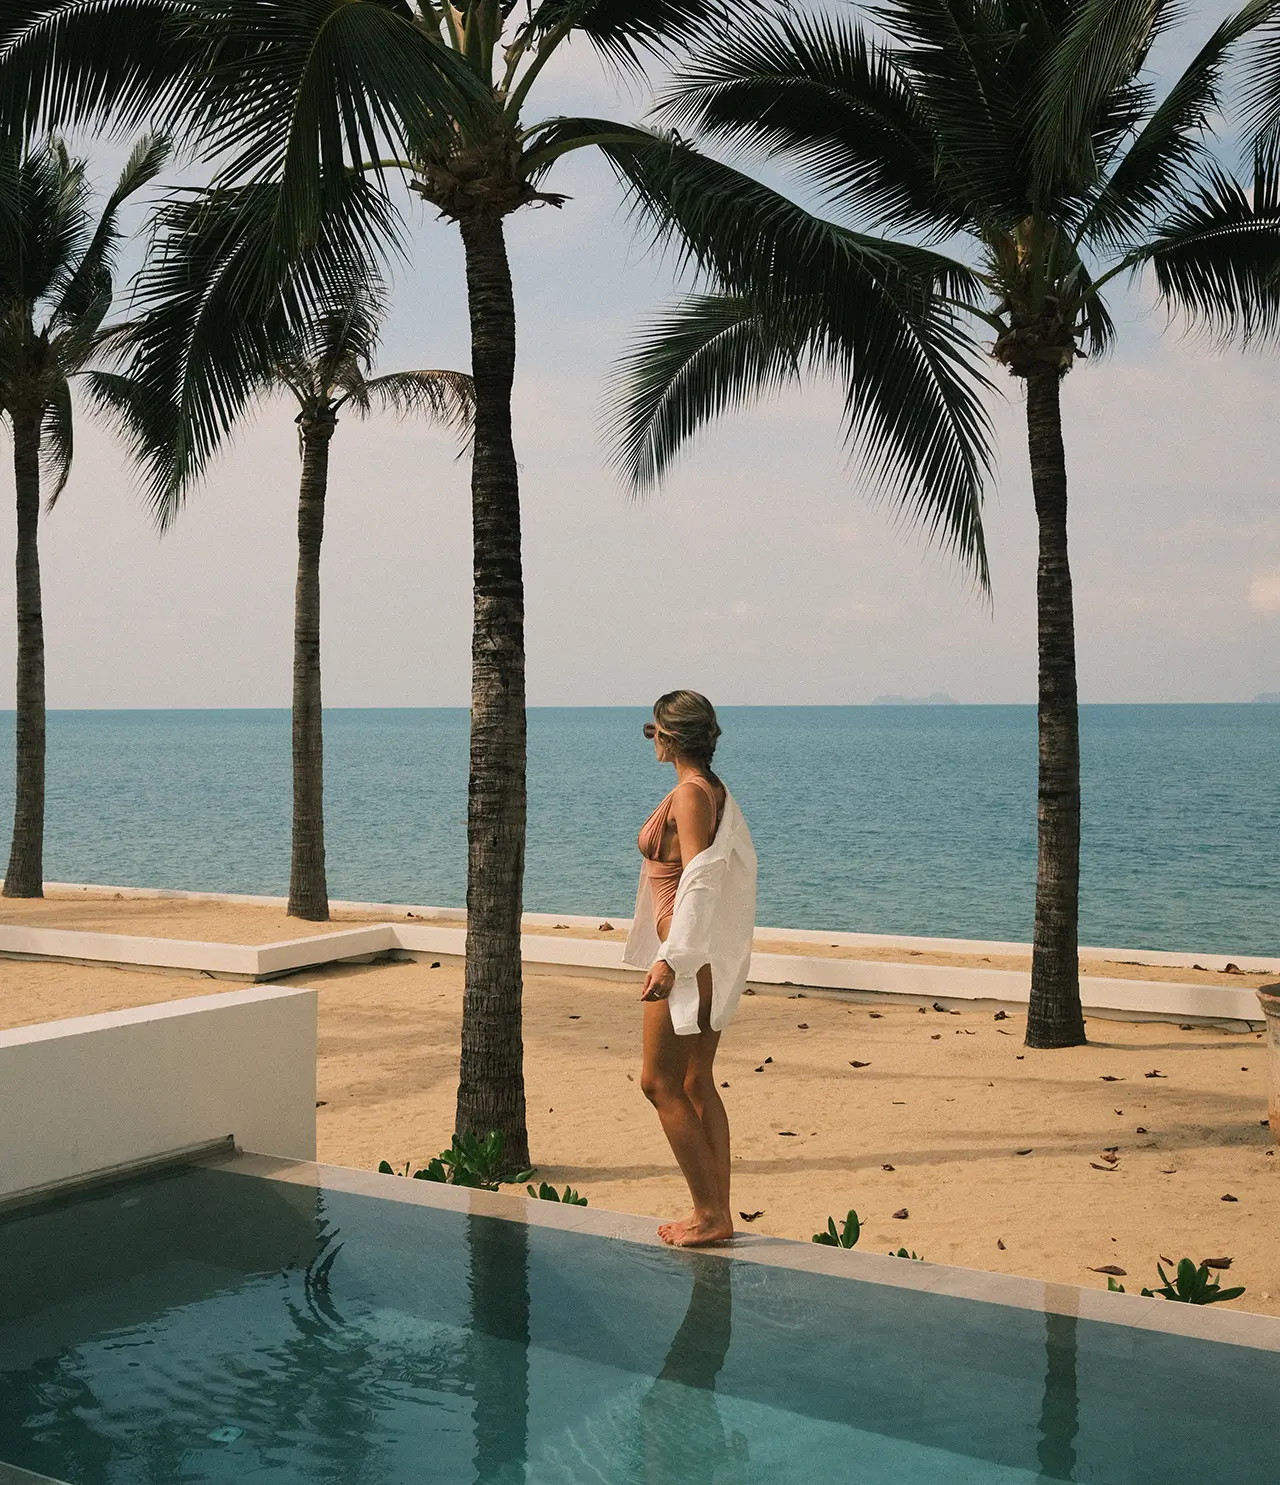 Stay 3, Pay 2 – Dive Into Paradise at Explorar Koh Samui